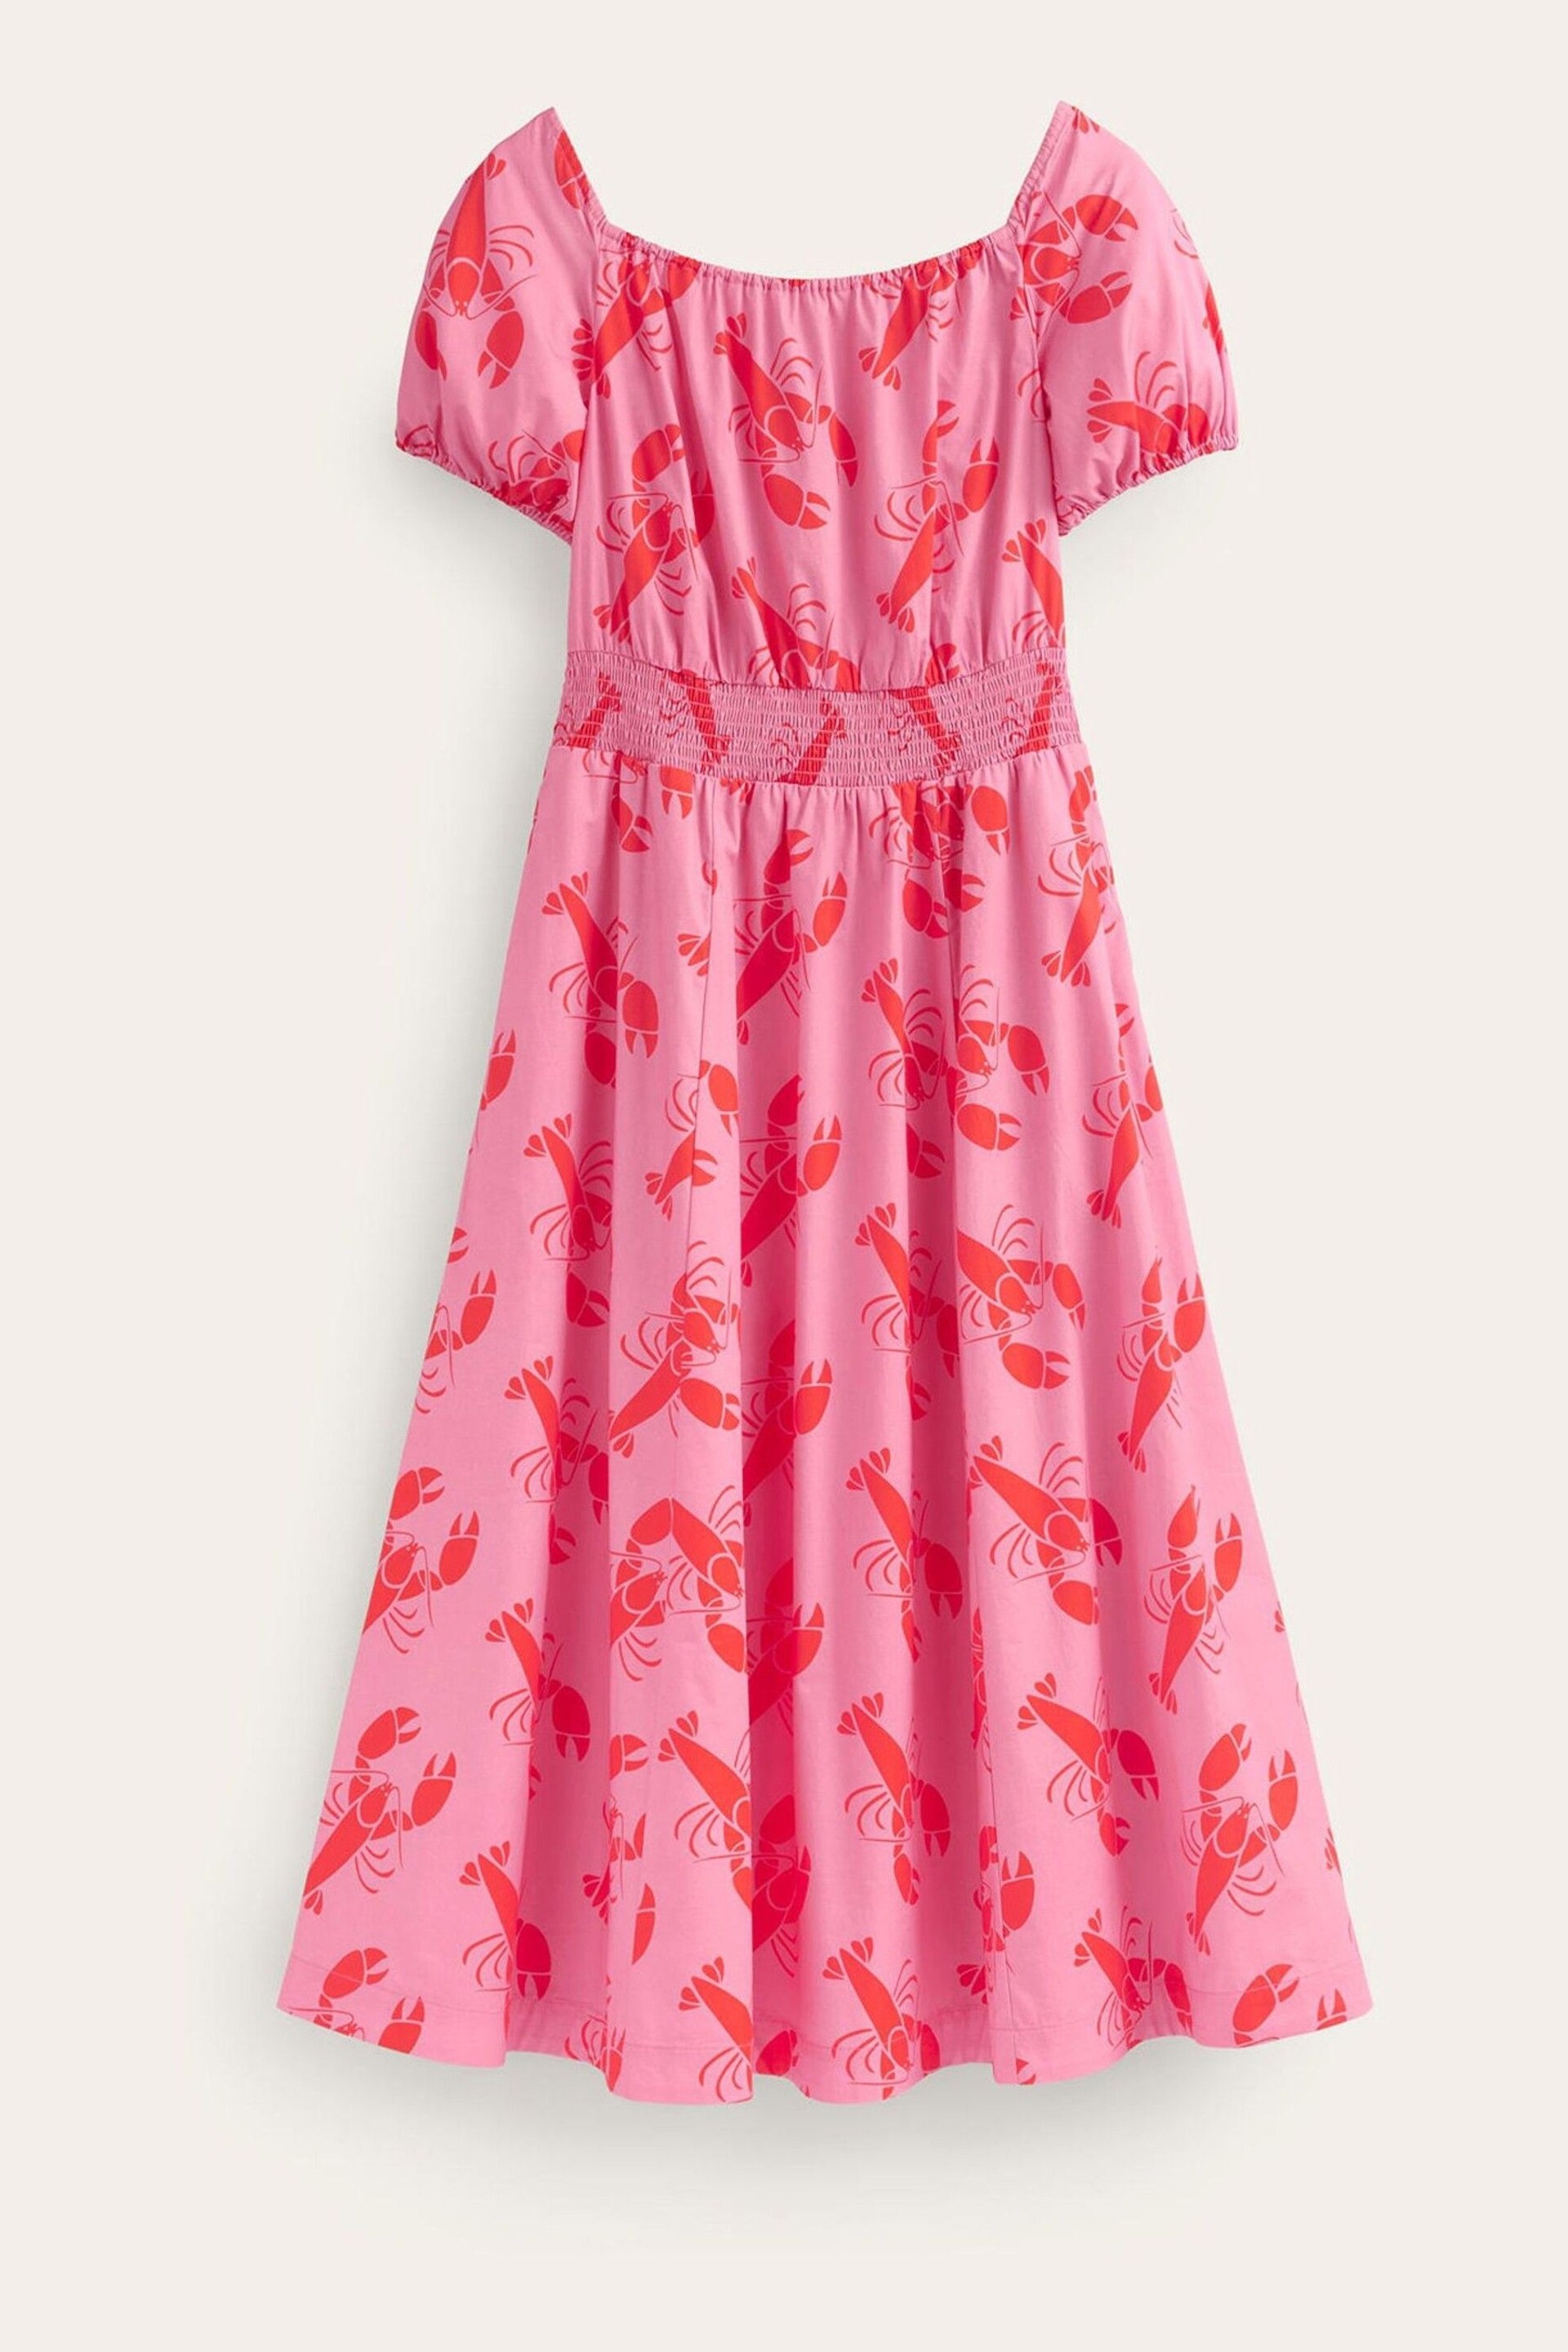 Boden Pink Petite Amber Cotton Midi Dress - Image 5 of 5